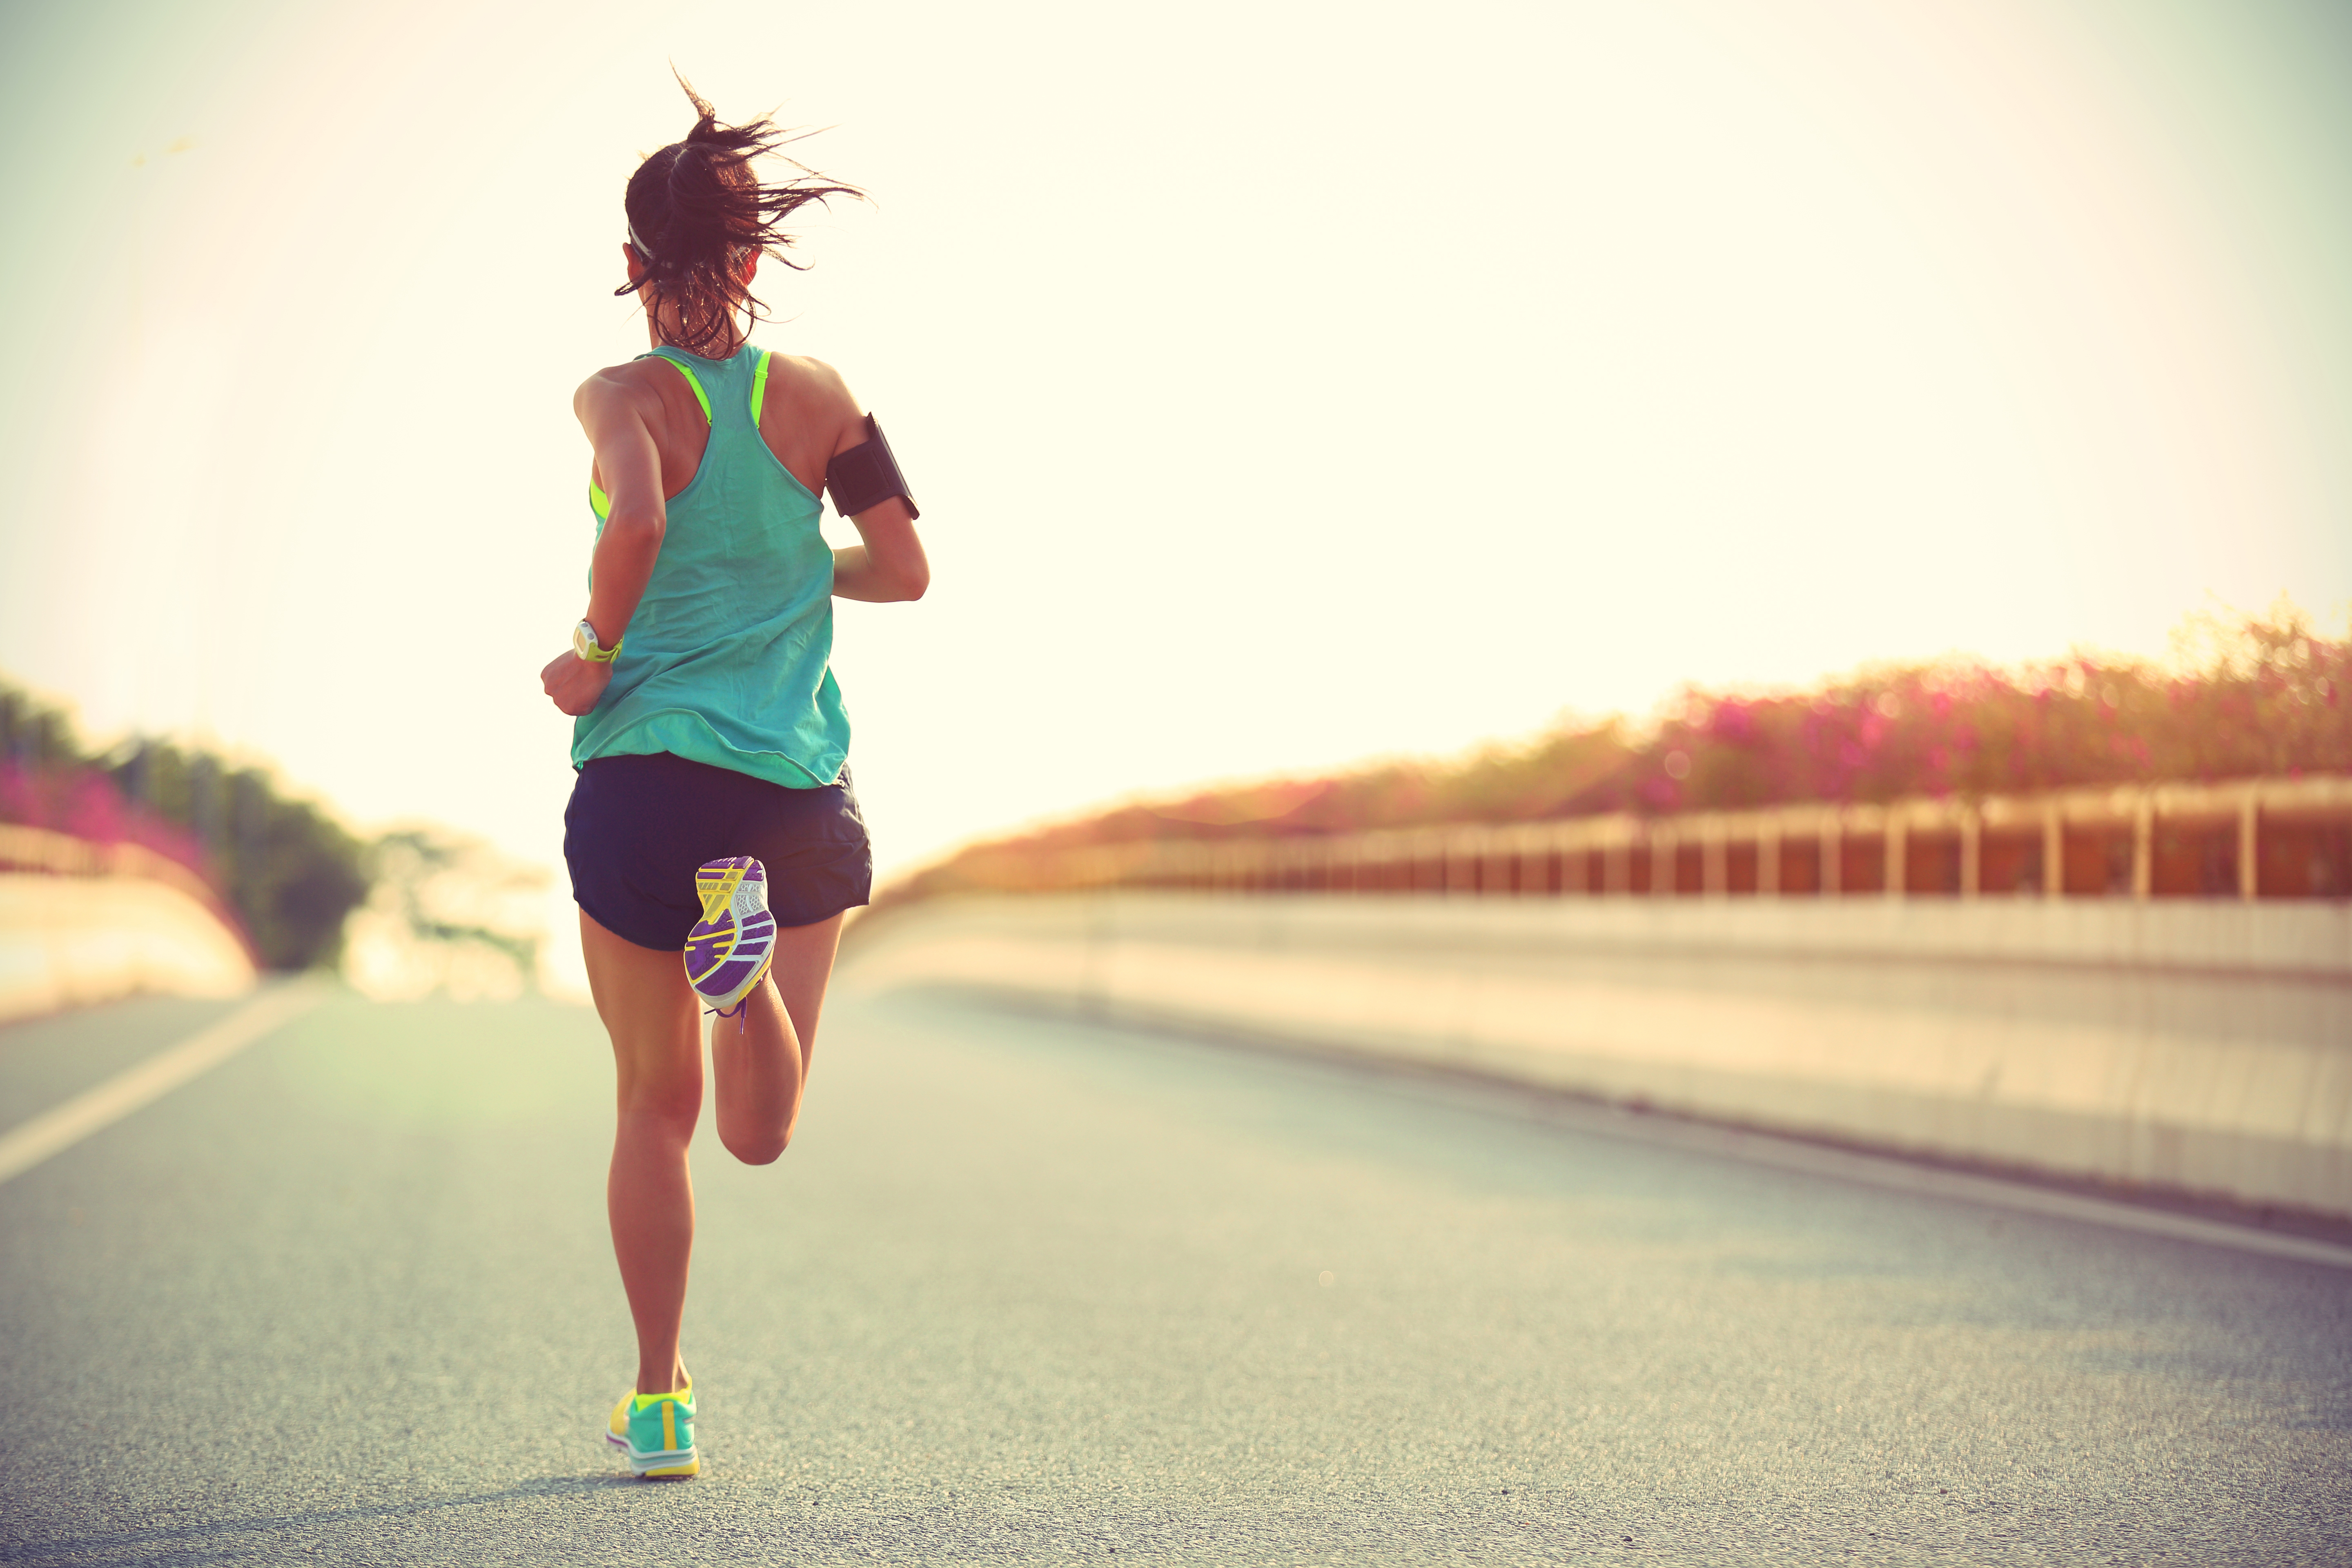 A woman jogging. | Source: Shutterstock